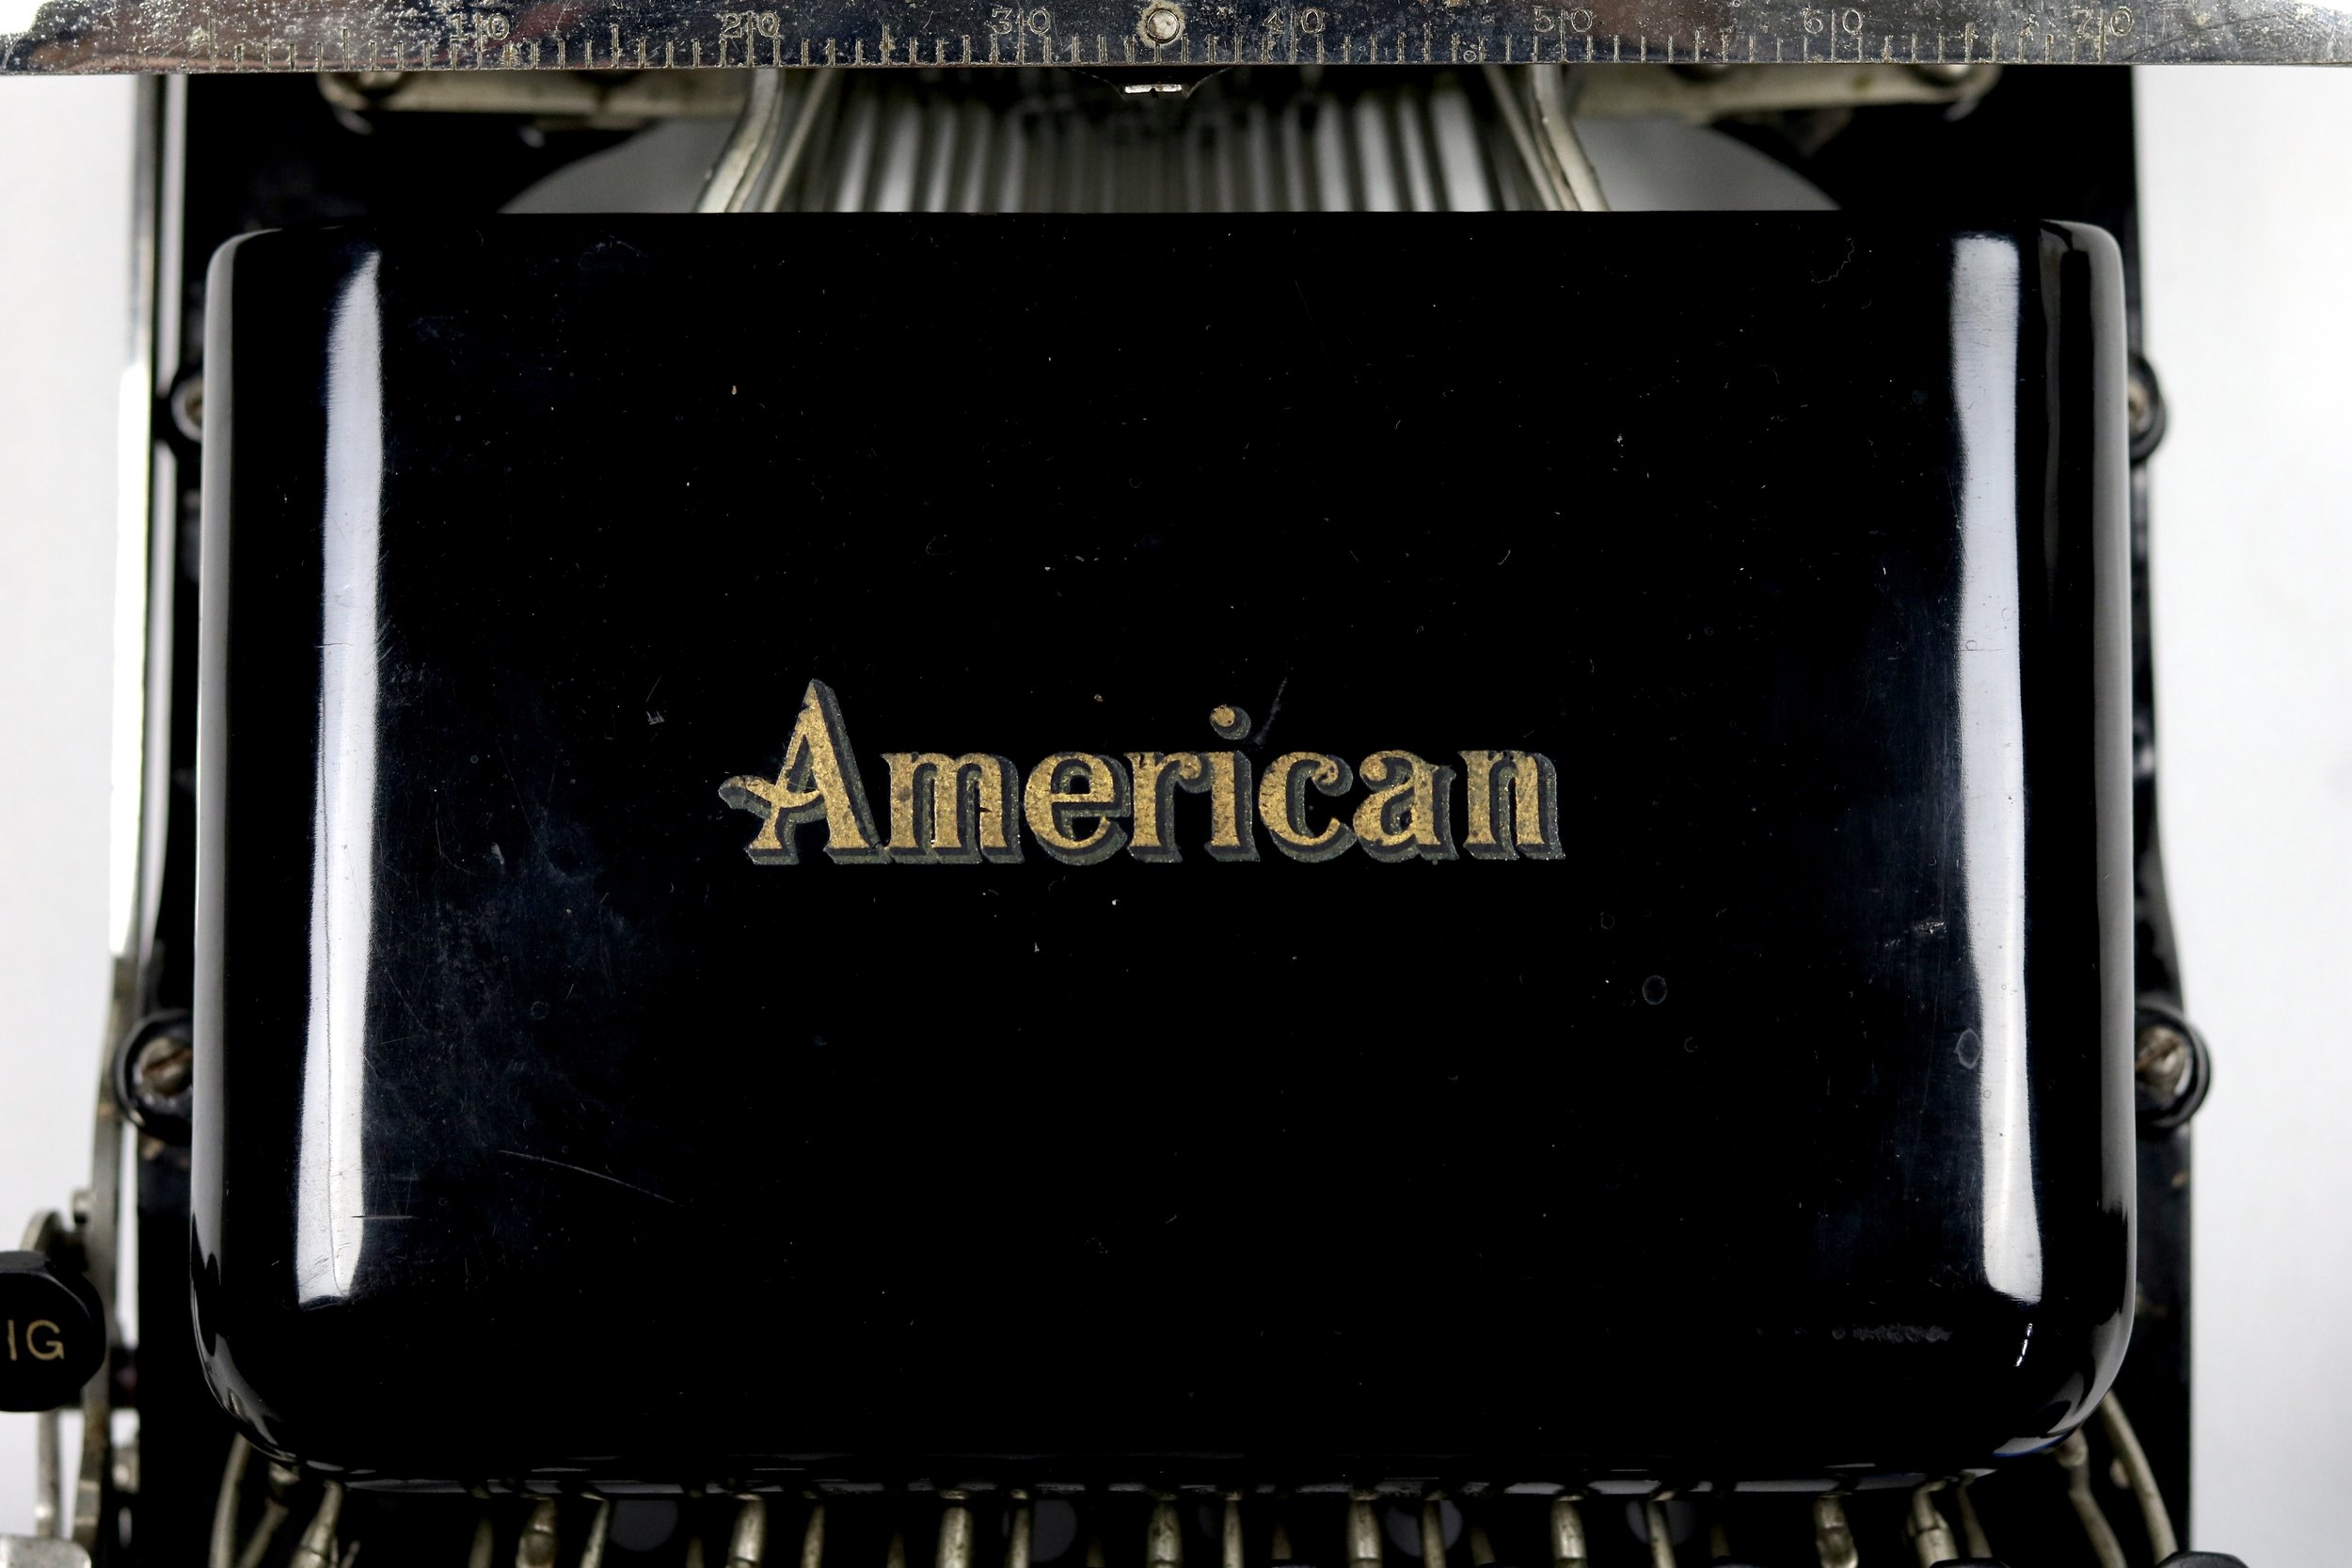 The American Model No.7 Typewriter - The American Typewriter Co. 265 Broadway, new York